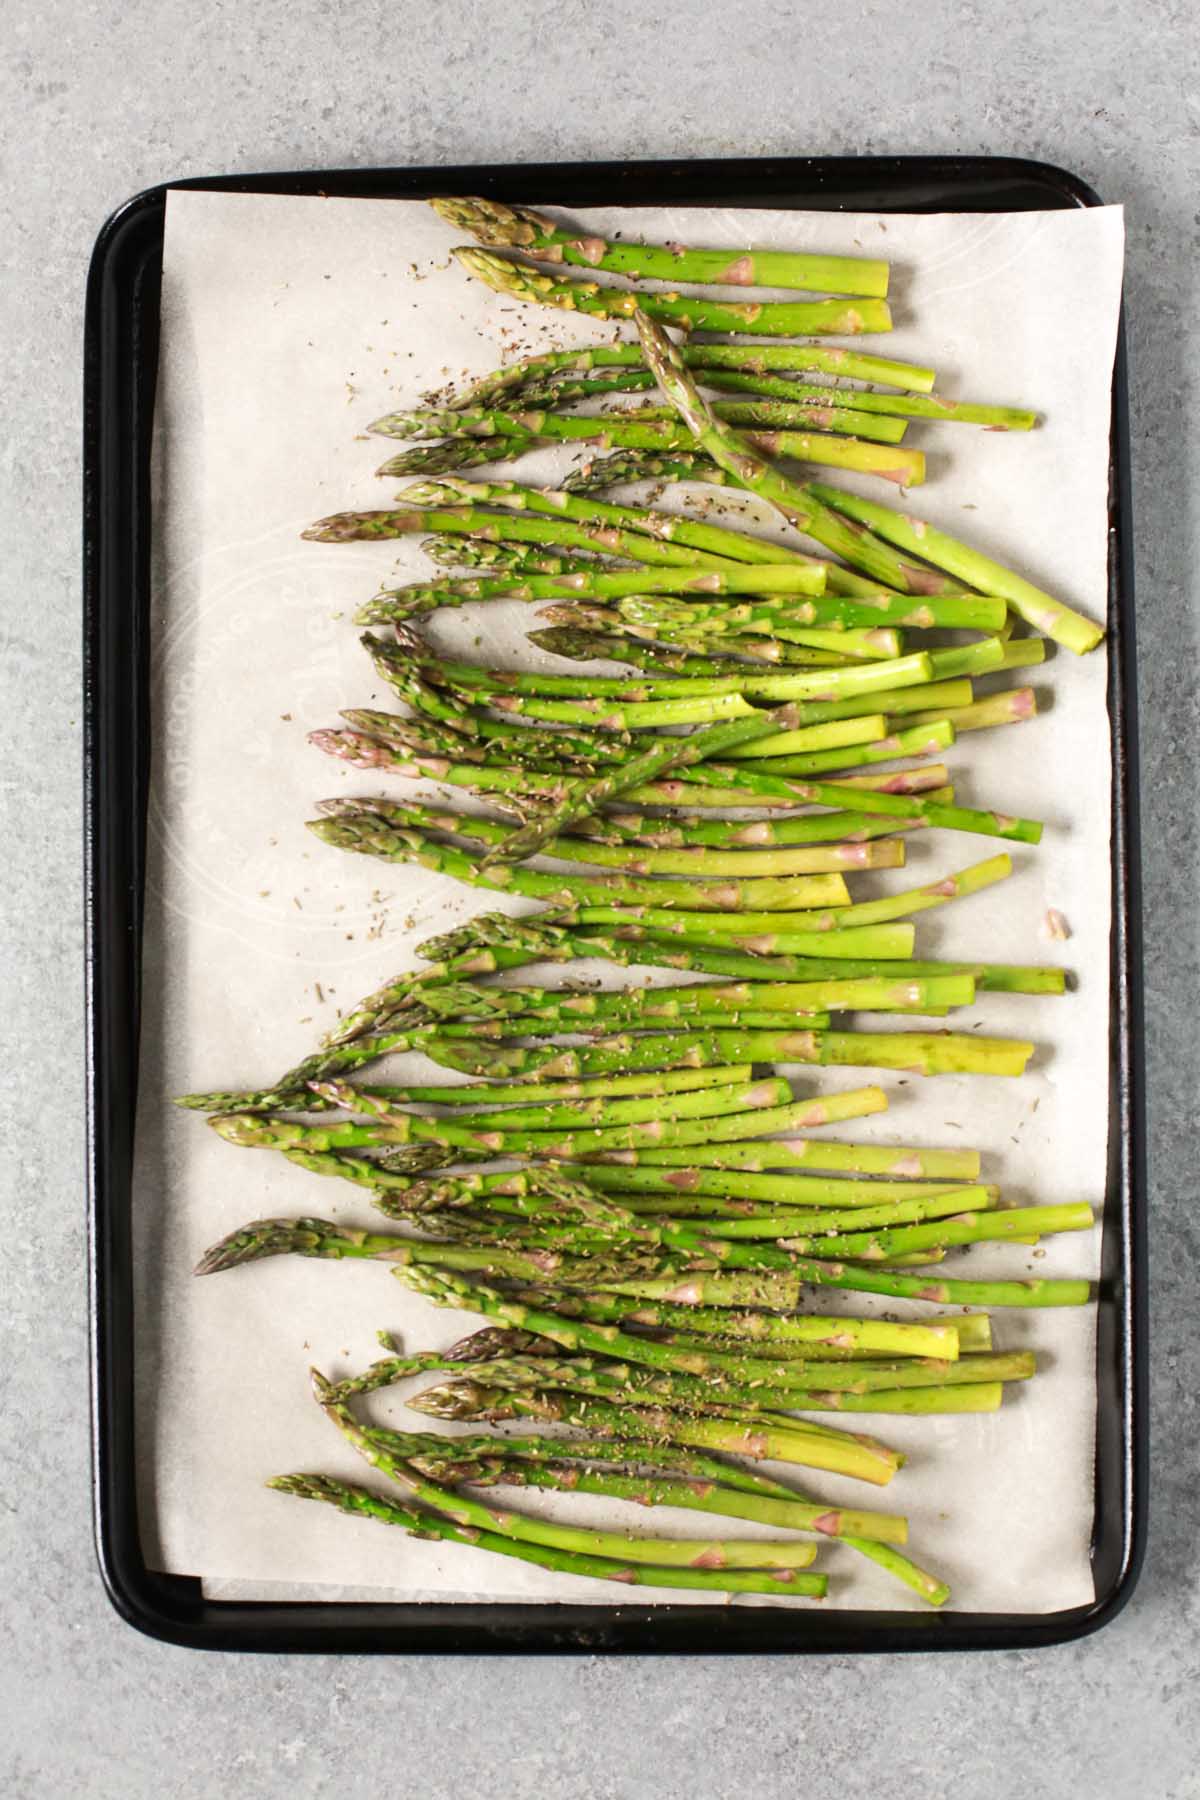 Seasoning asparagus on a sheet pan before roasting.